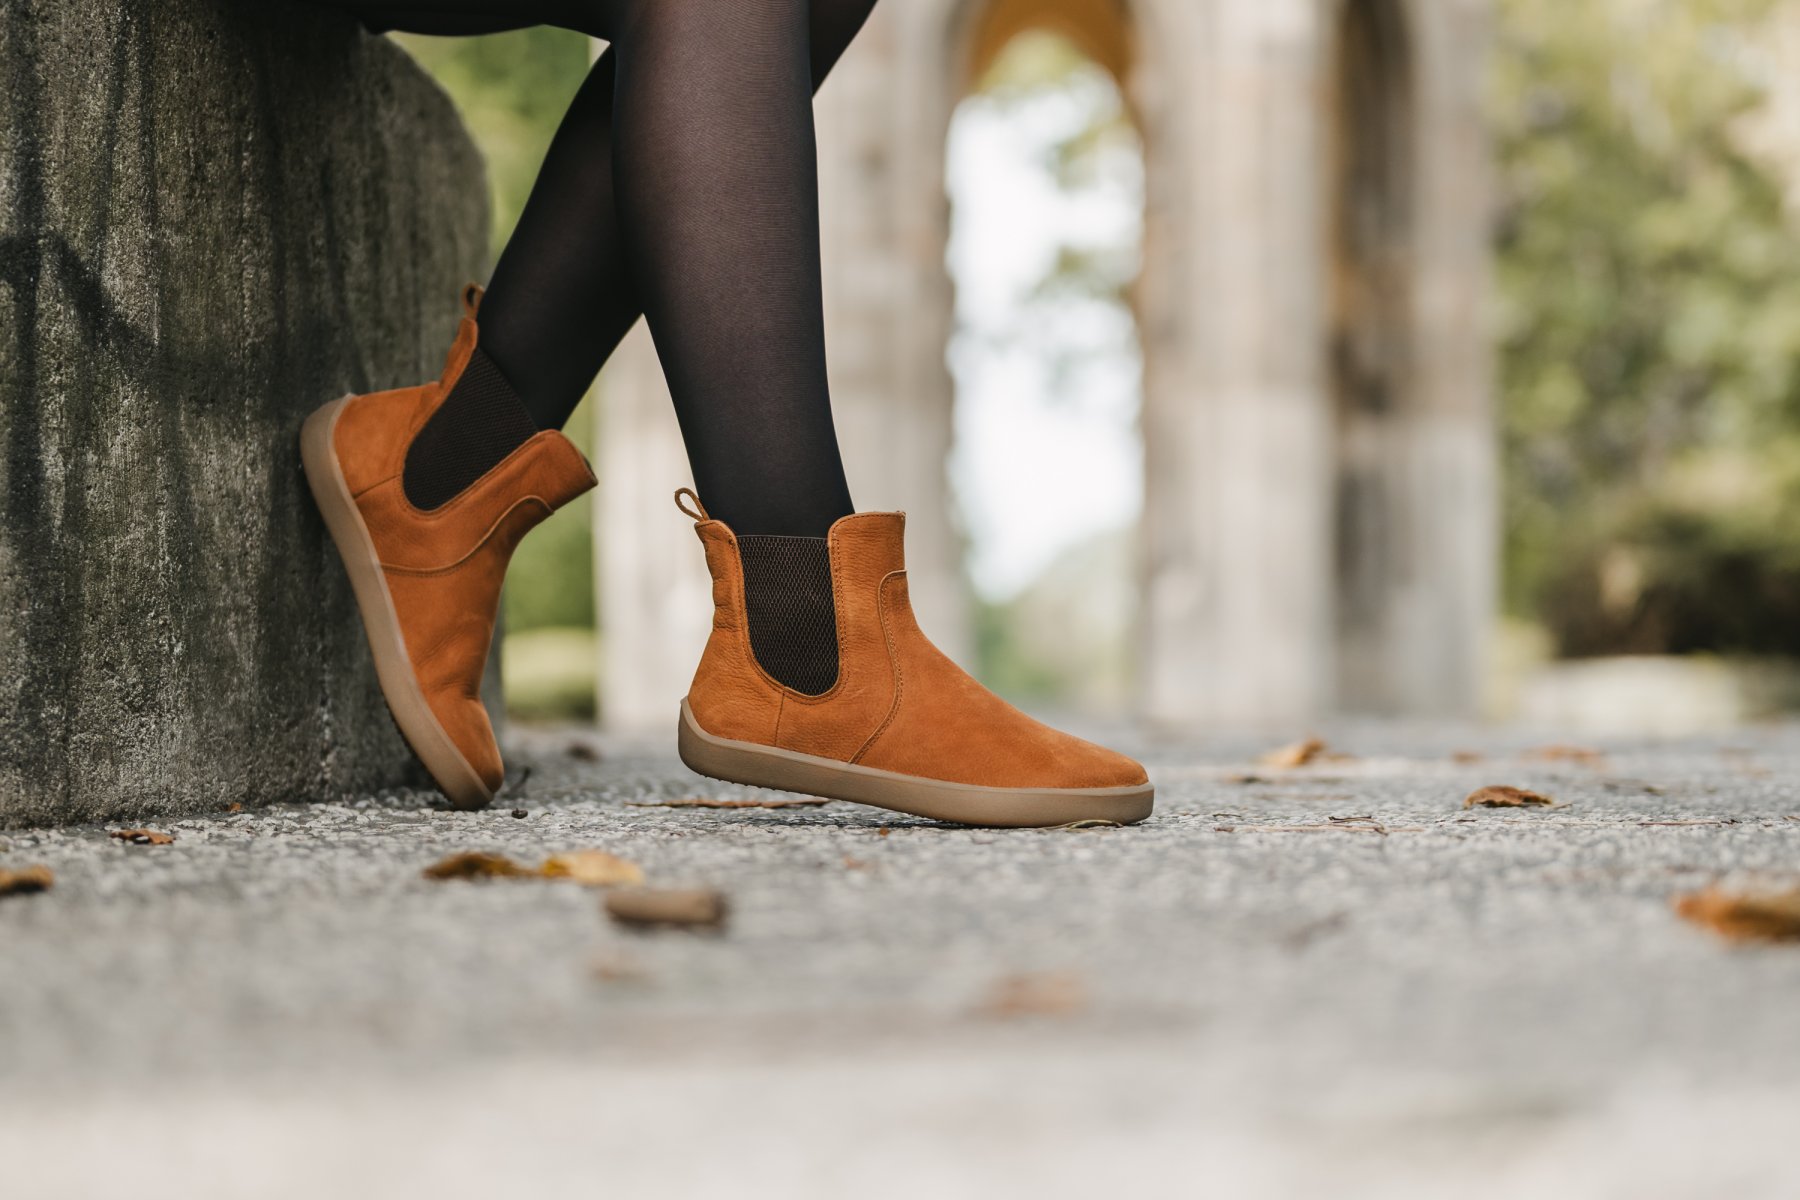 Buy PIU Women's Premium Cotton Ankle Length Leggings Stretchable